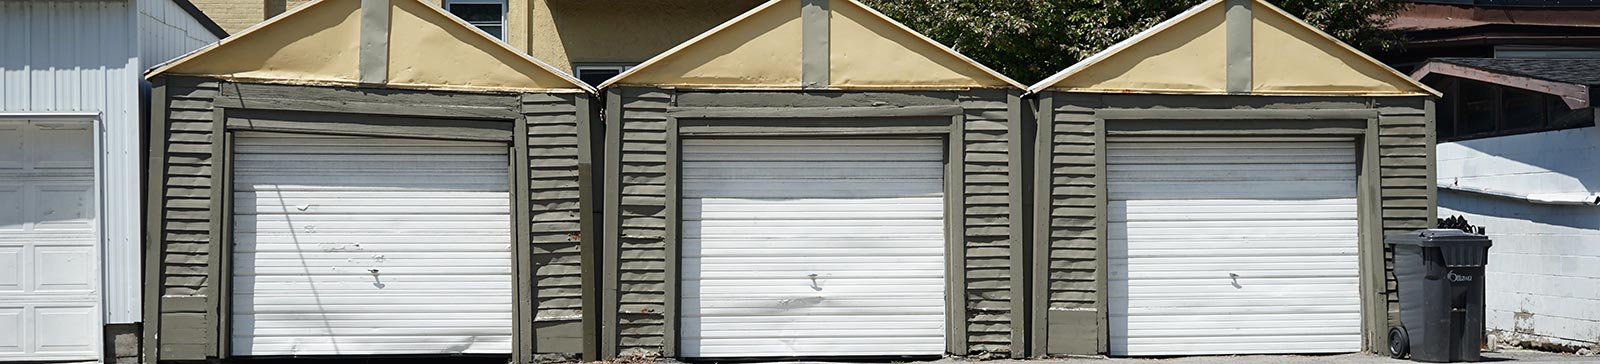 Garage Door Repair Services Near Me Richmond CA